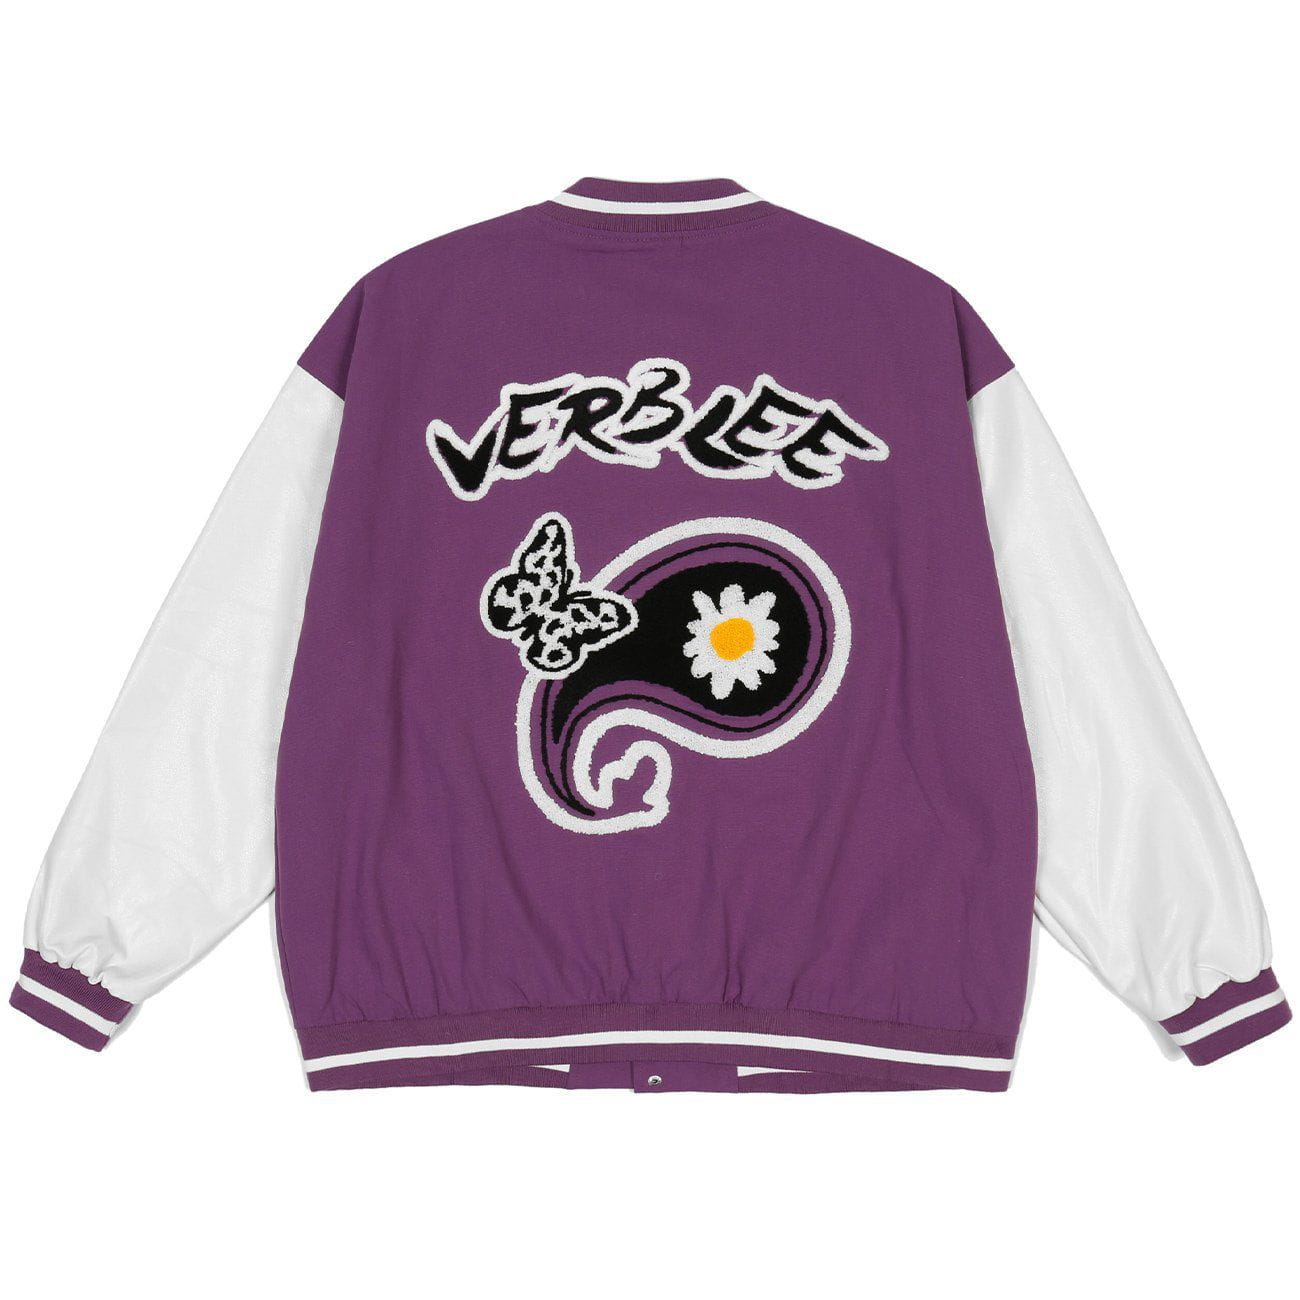 Majesda® - Spotted Butterfly Daisy Embroidery Varsity Jacket outfit ideas, streetwear fashion - majesda.com